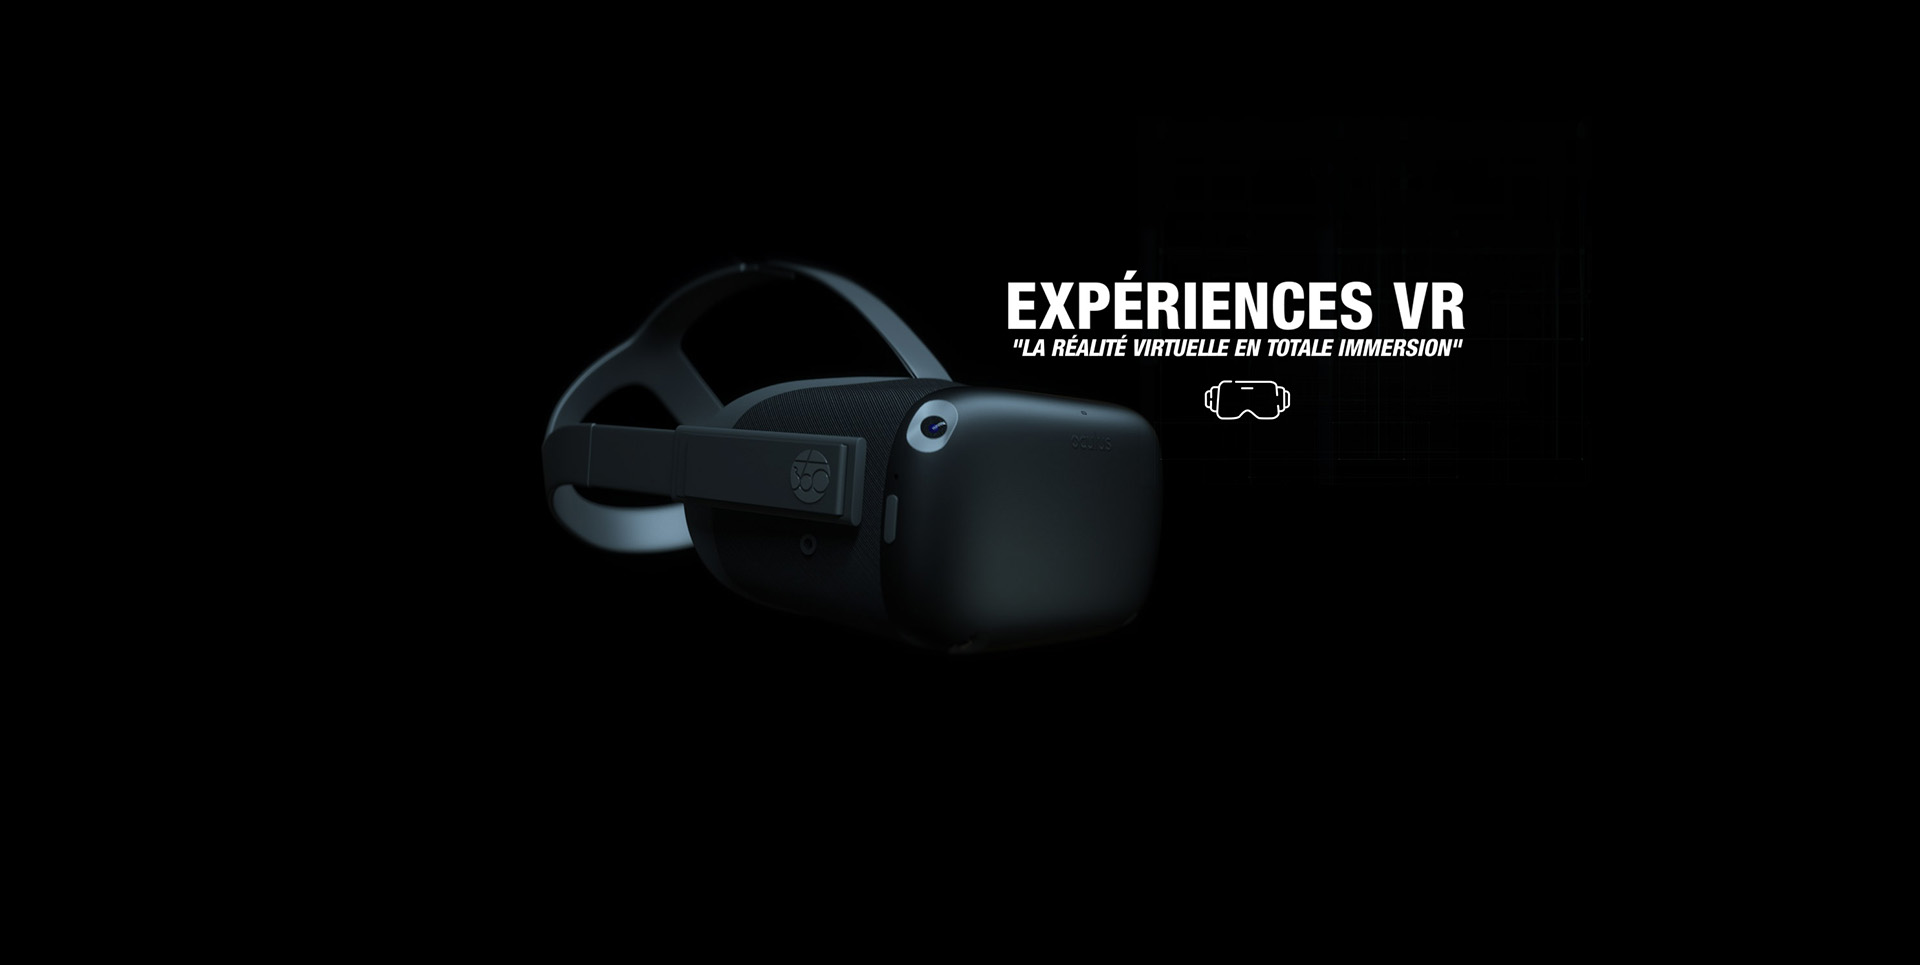 Casques VR : diffusion de nos photos et vidéos 360